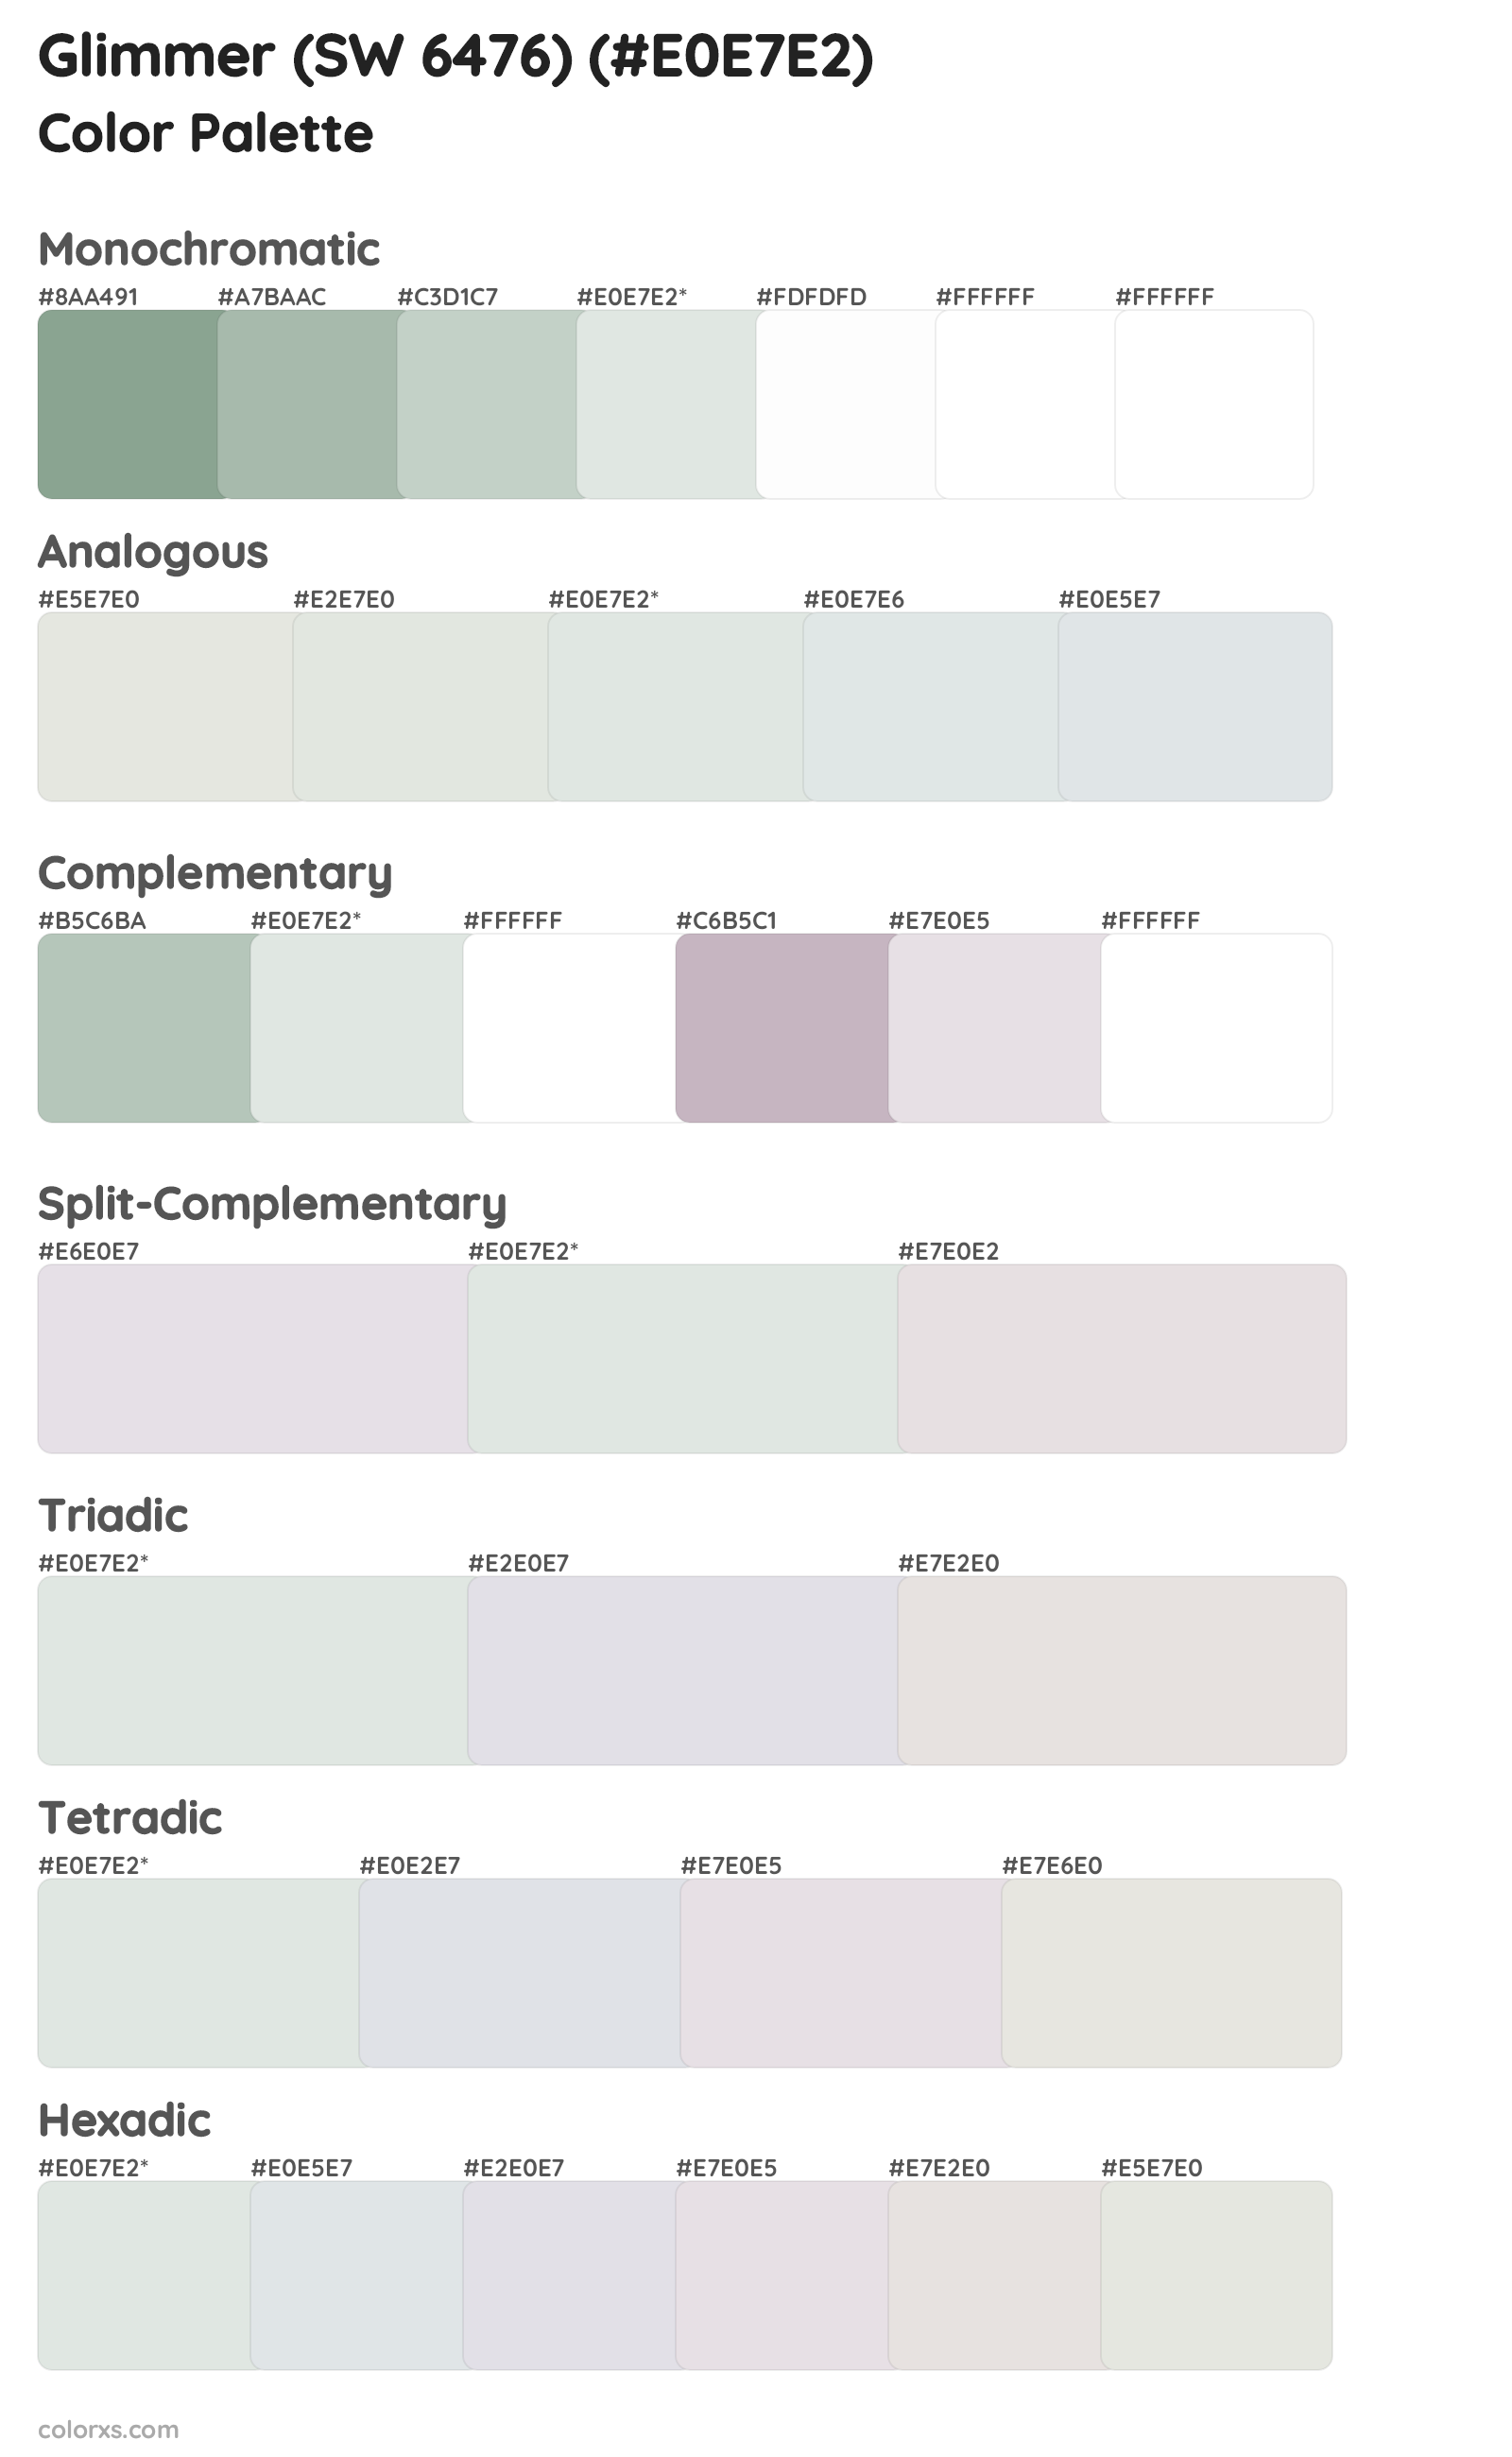 Glimmer (SW 6476) Color Scheme Palettes